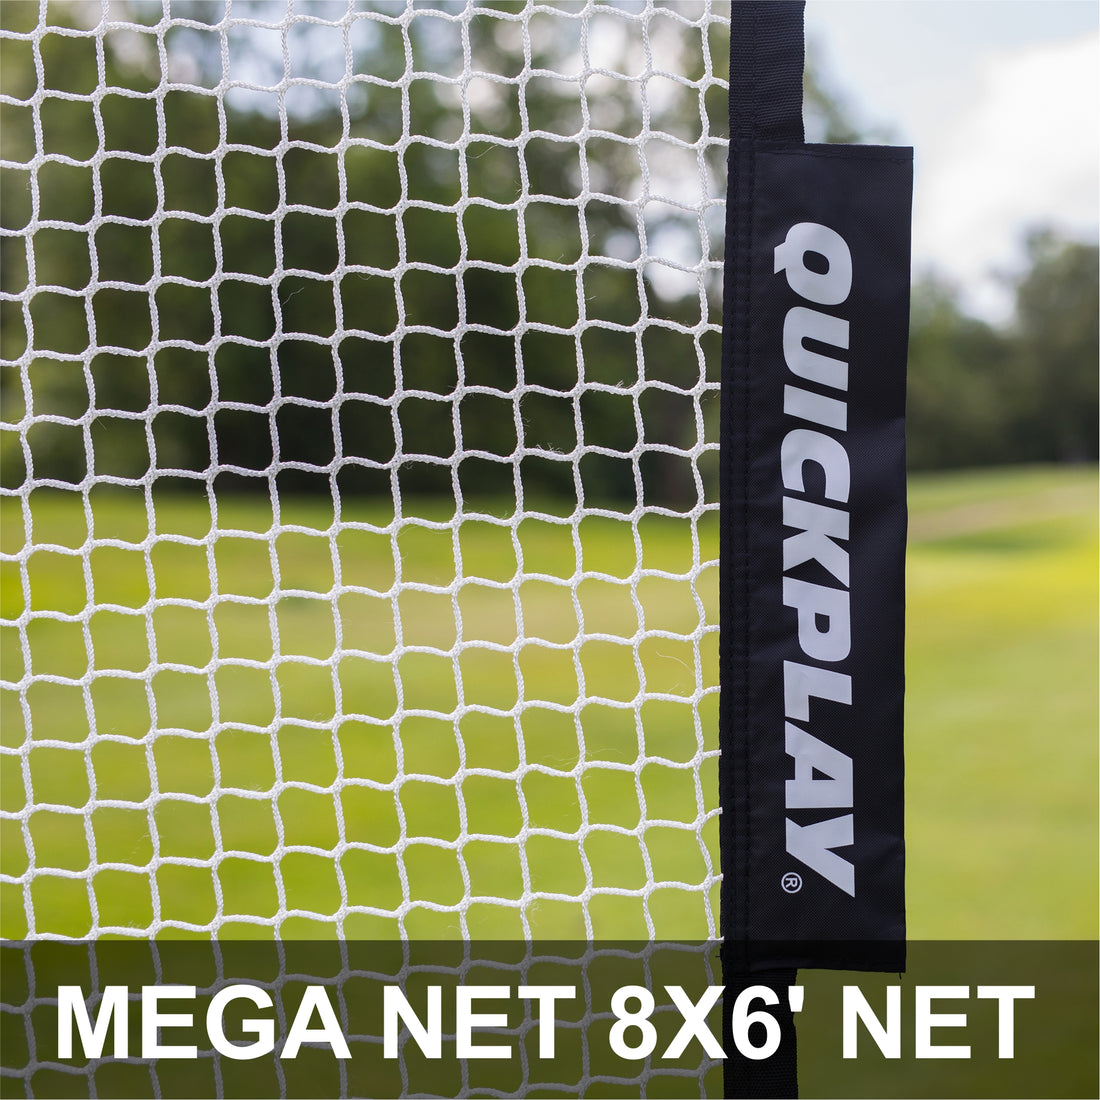 SPARE PART - NET - Mega Net 8x6' Replacement Net